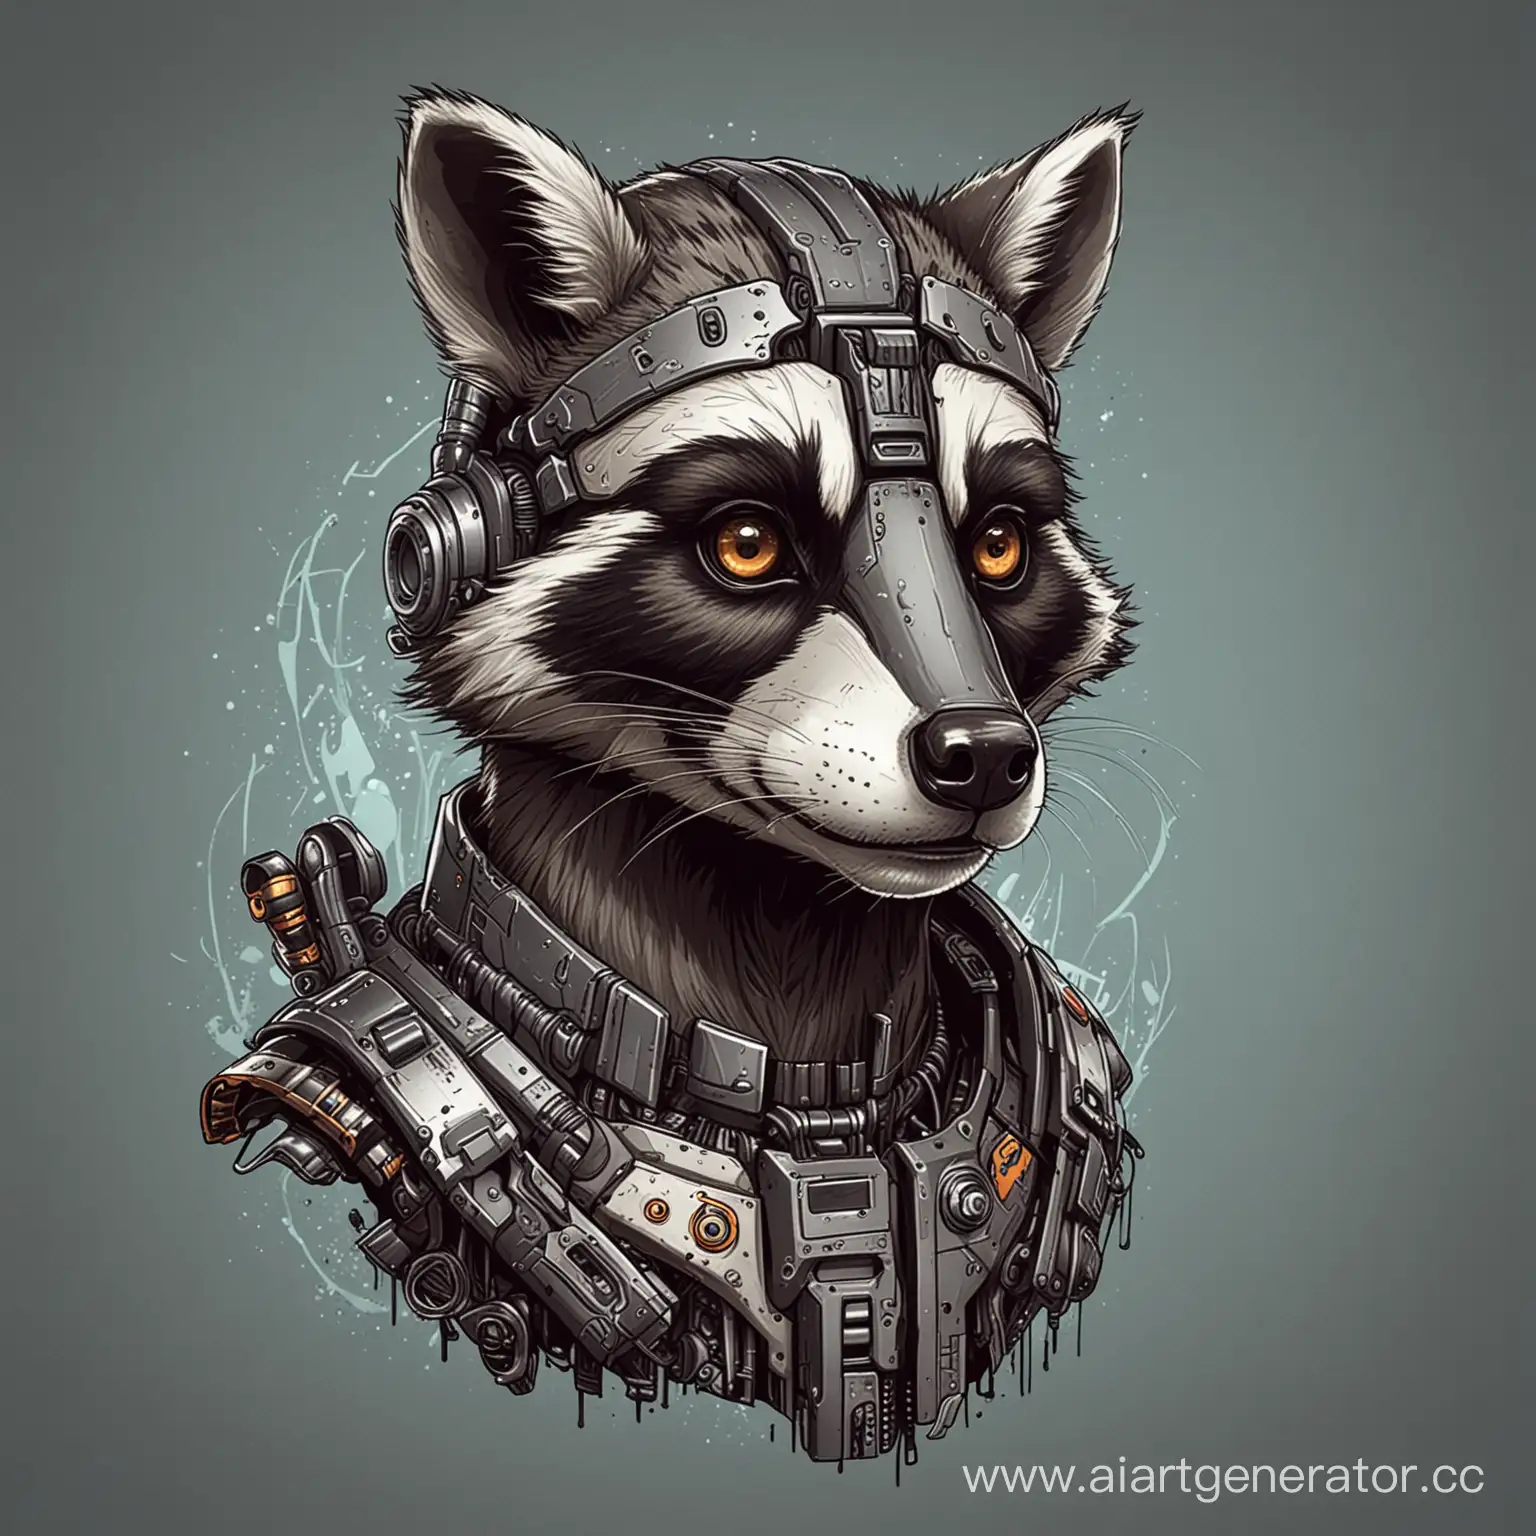 Drawn-Style-Cyborg-Raccoon-Art